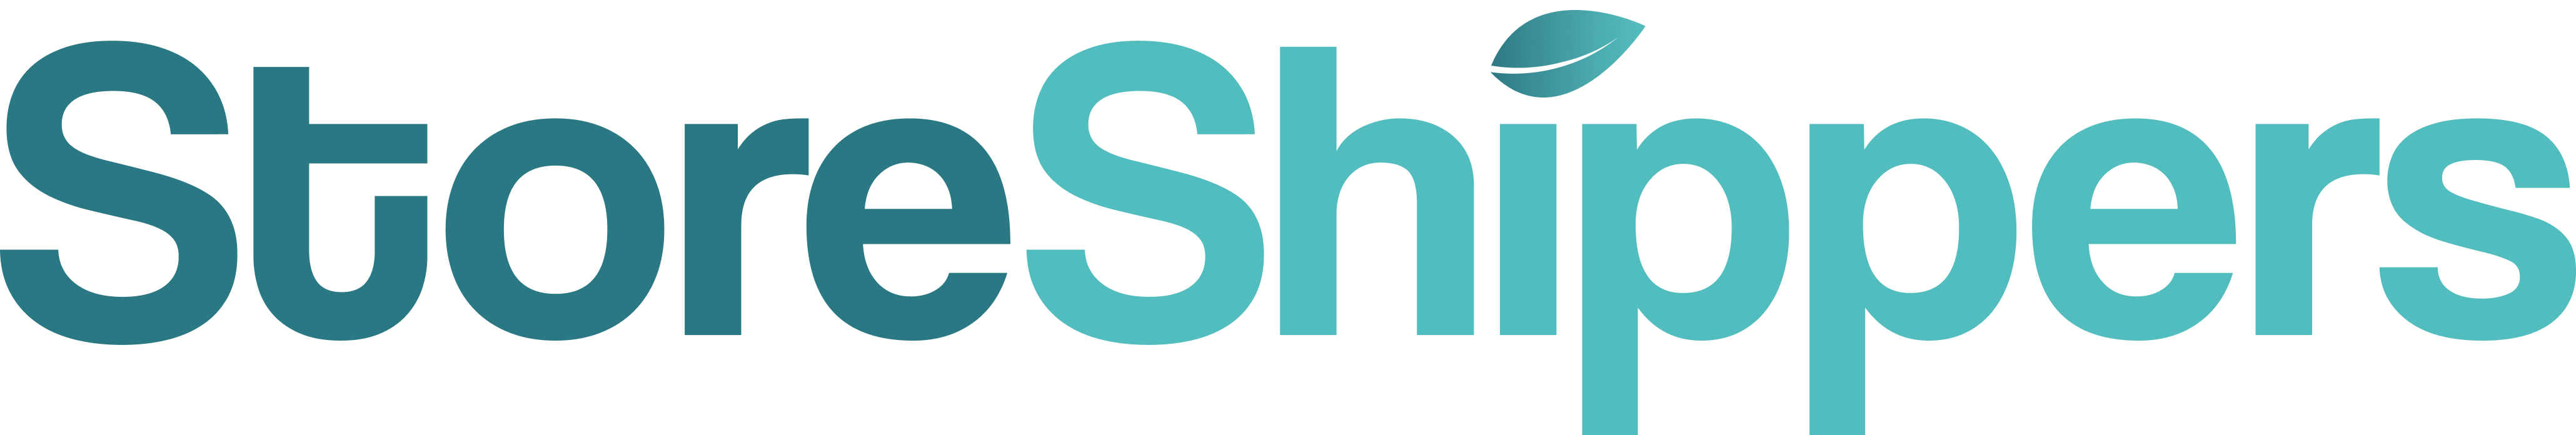 Logo StoreShippers